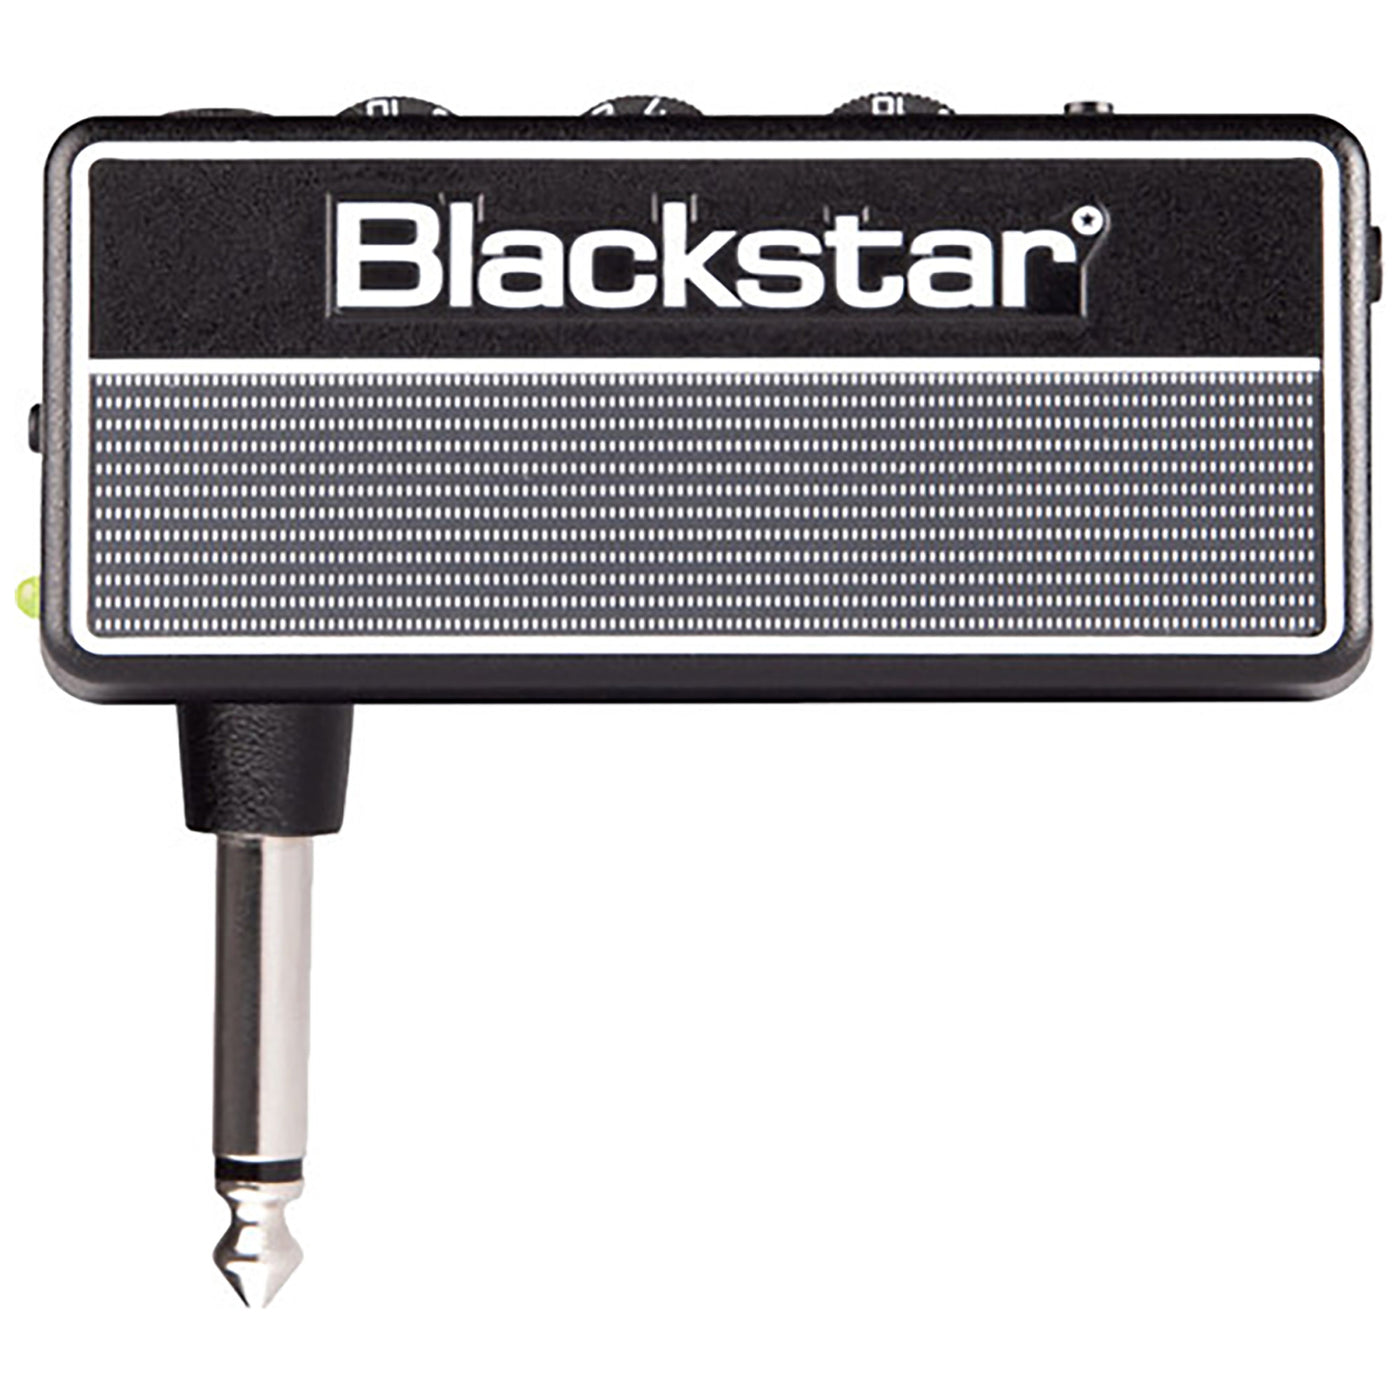 Blackstar amPlug 2 FLY - Headphone Guitar Amplifier